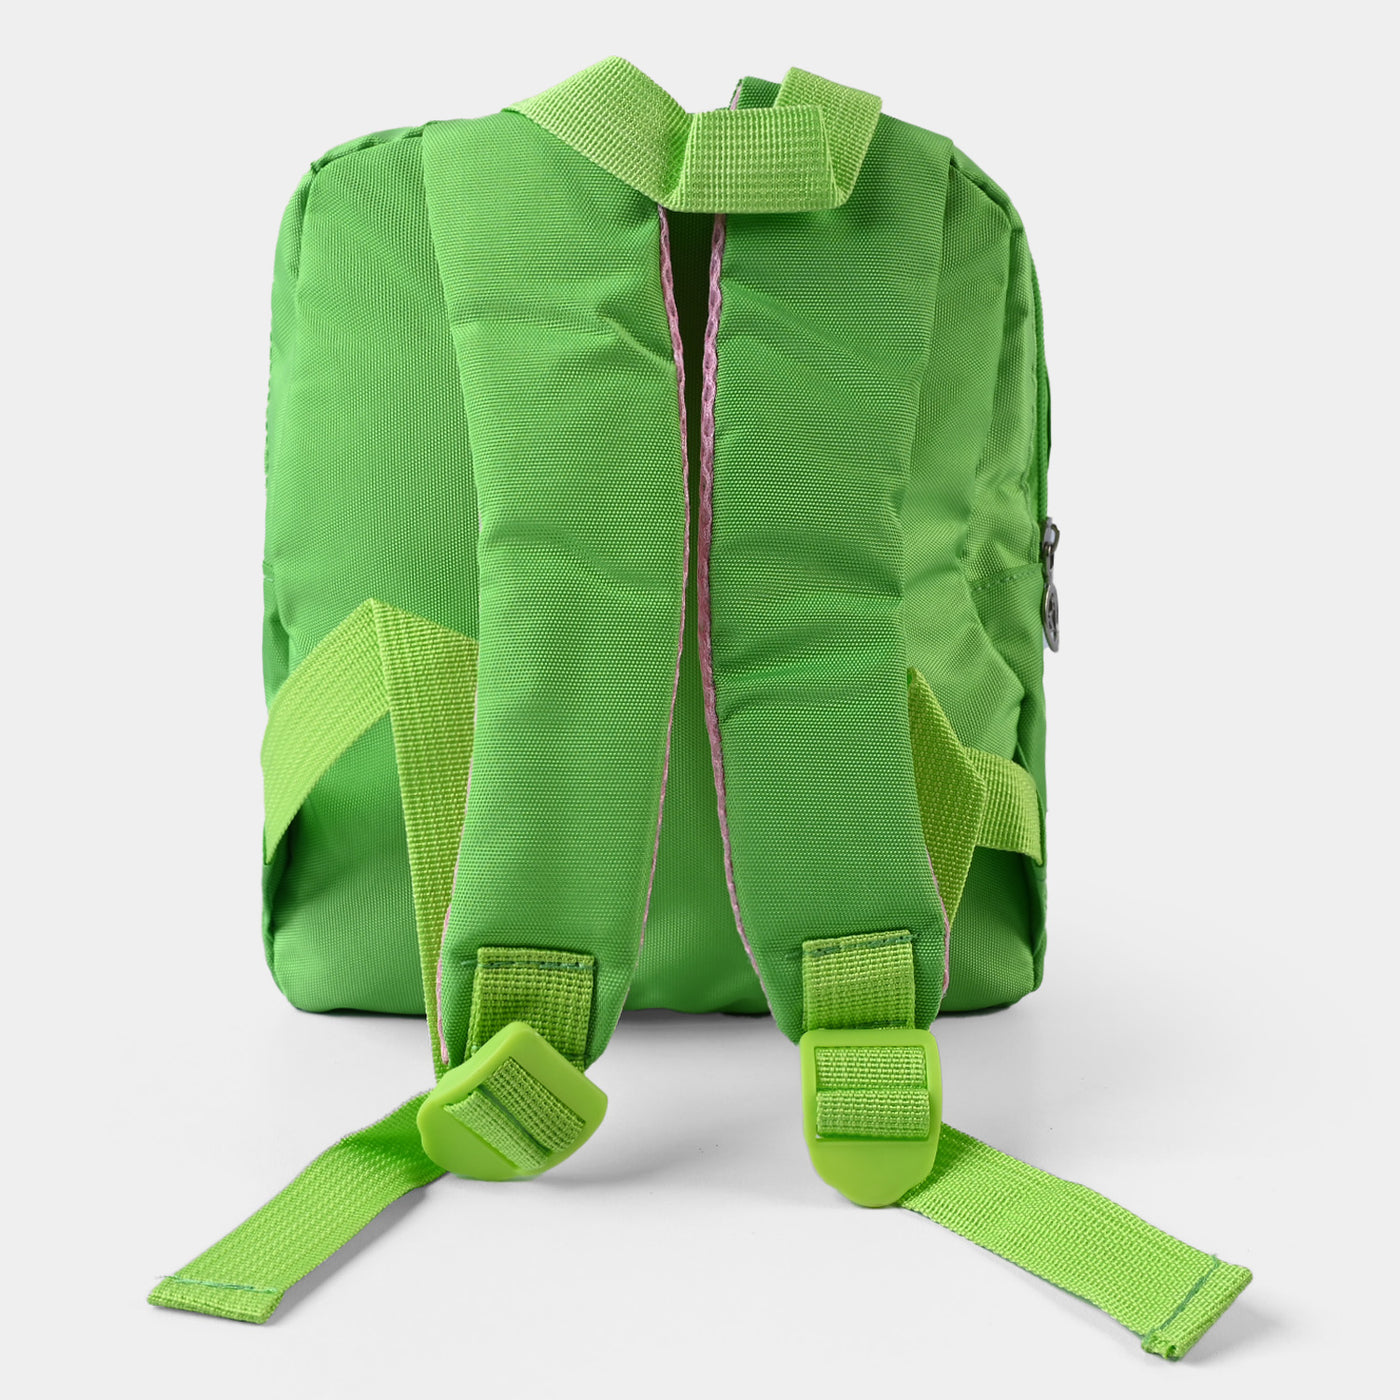 Kids Backpack super wings (Green)